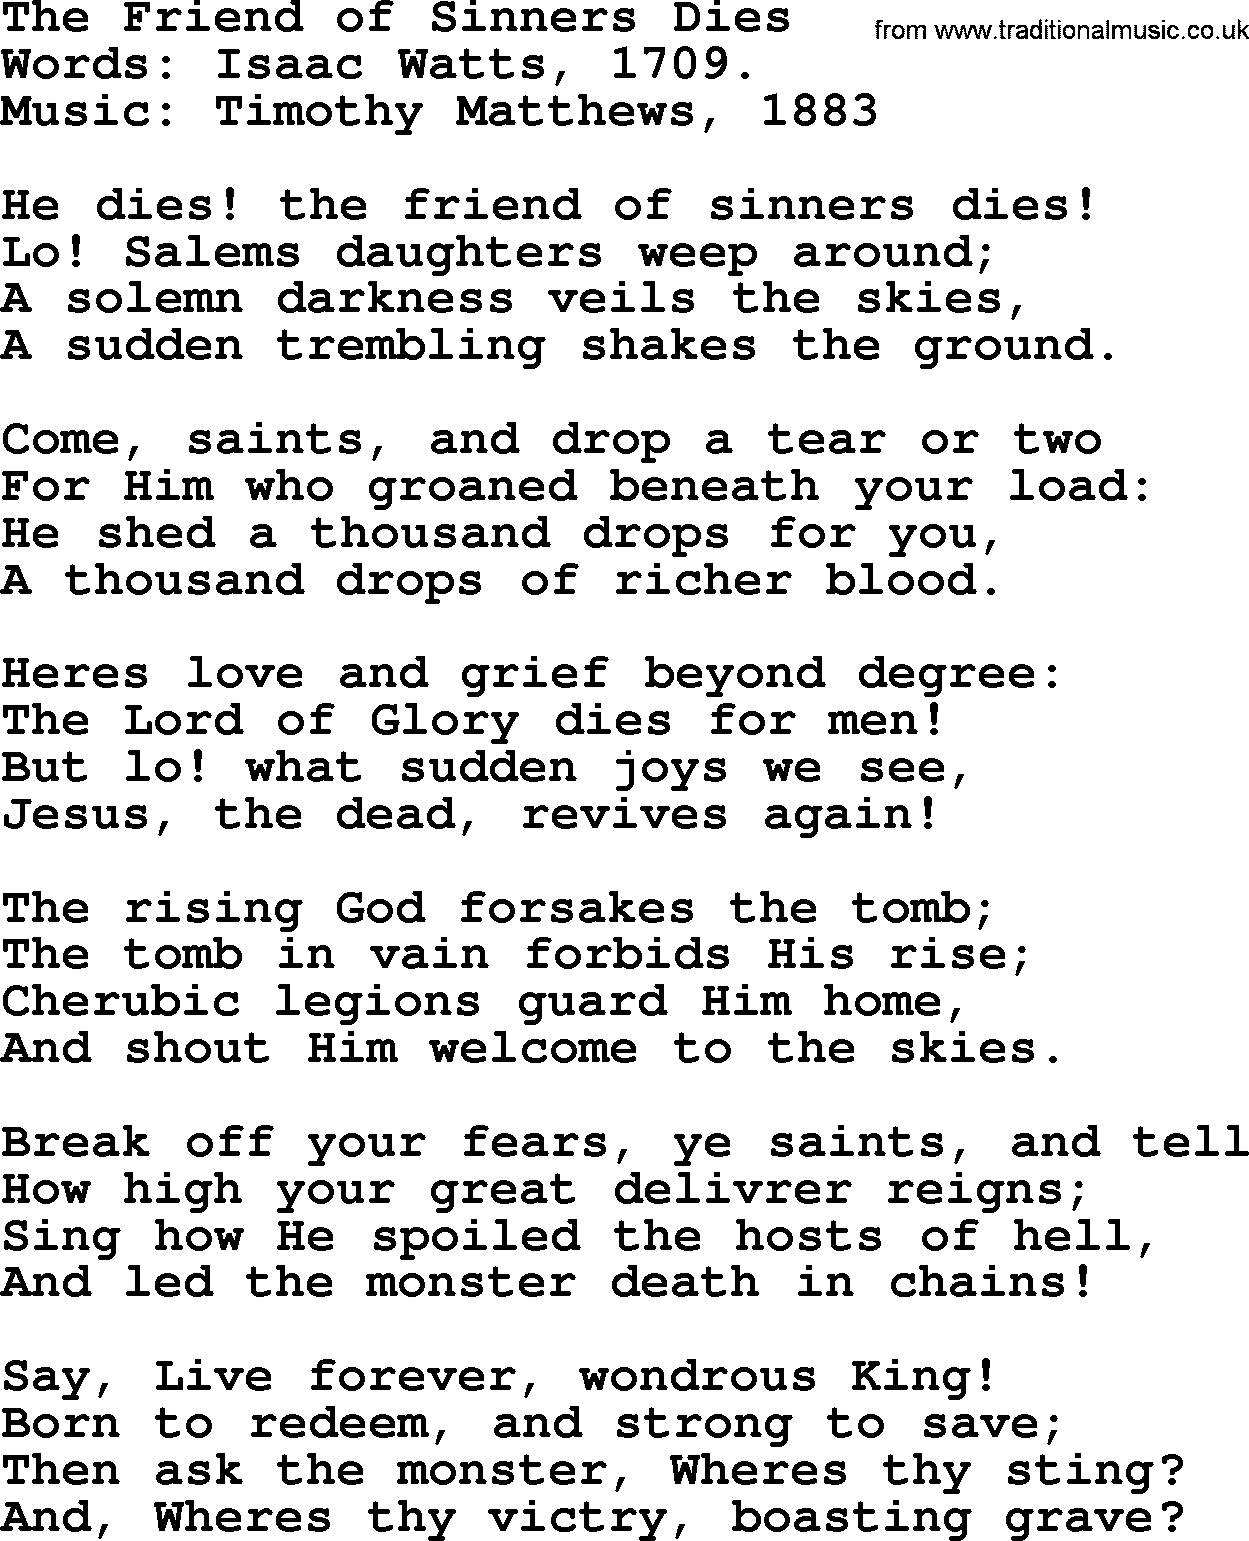 Isaac Watts Christian hymn: The Friend of Sinners Dies- lyricss